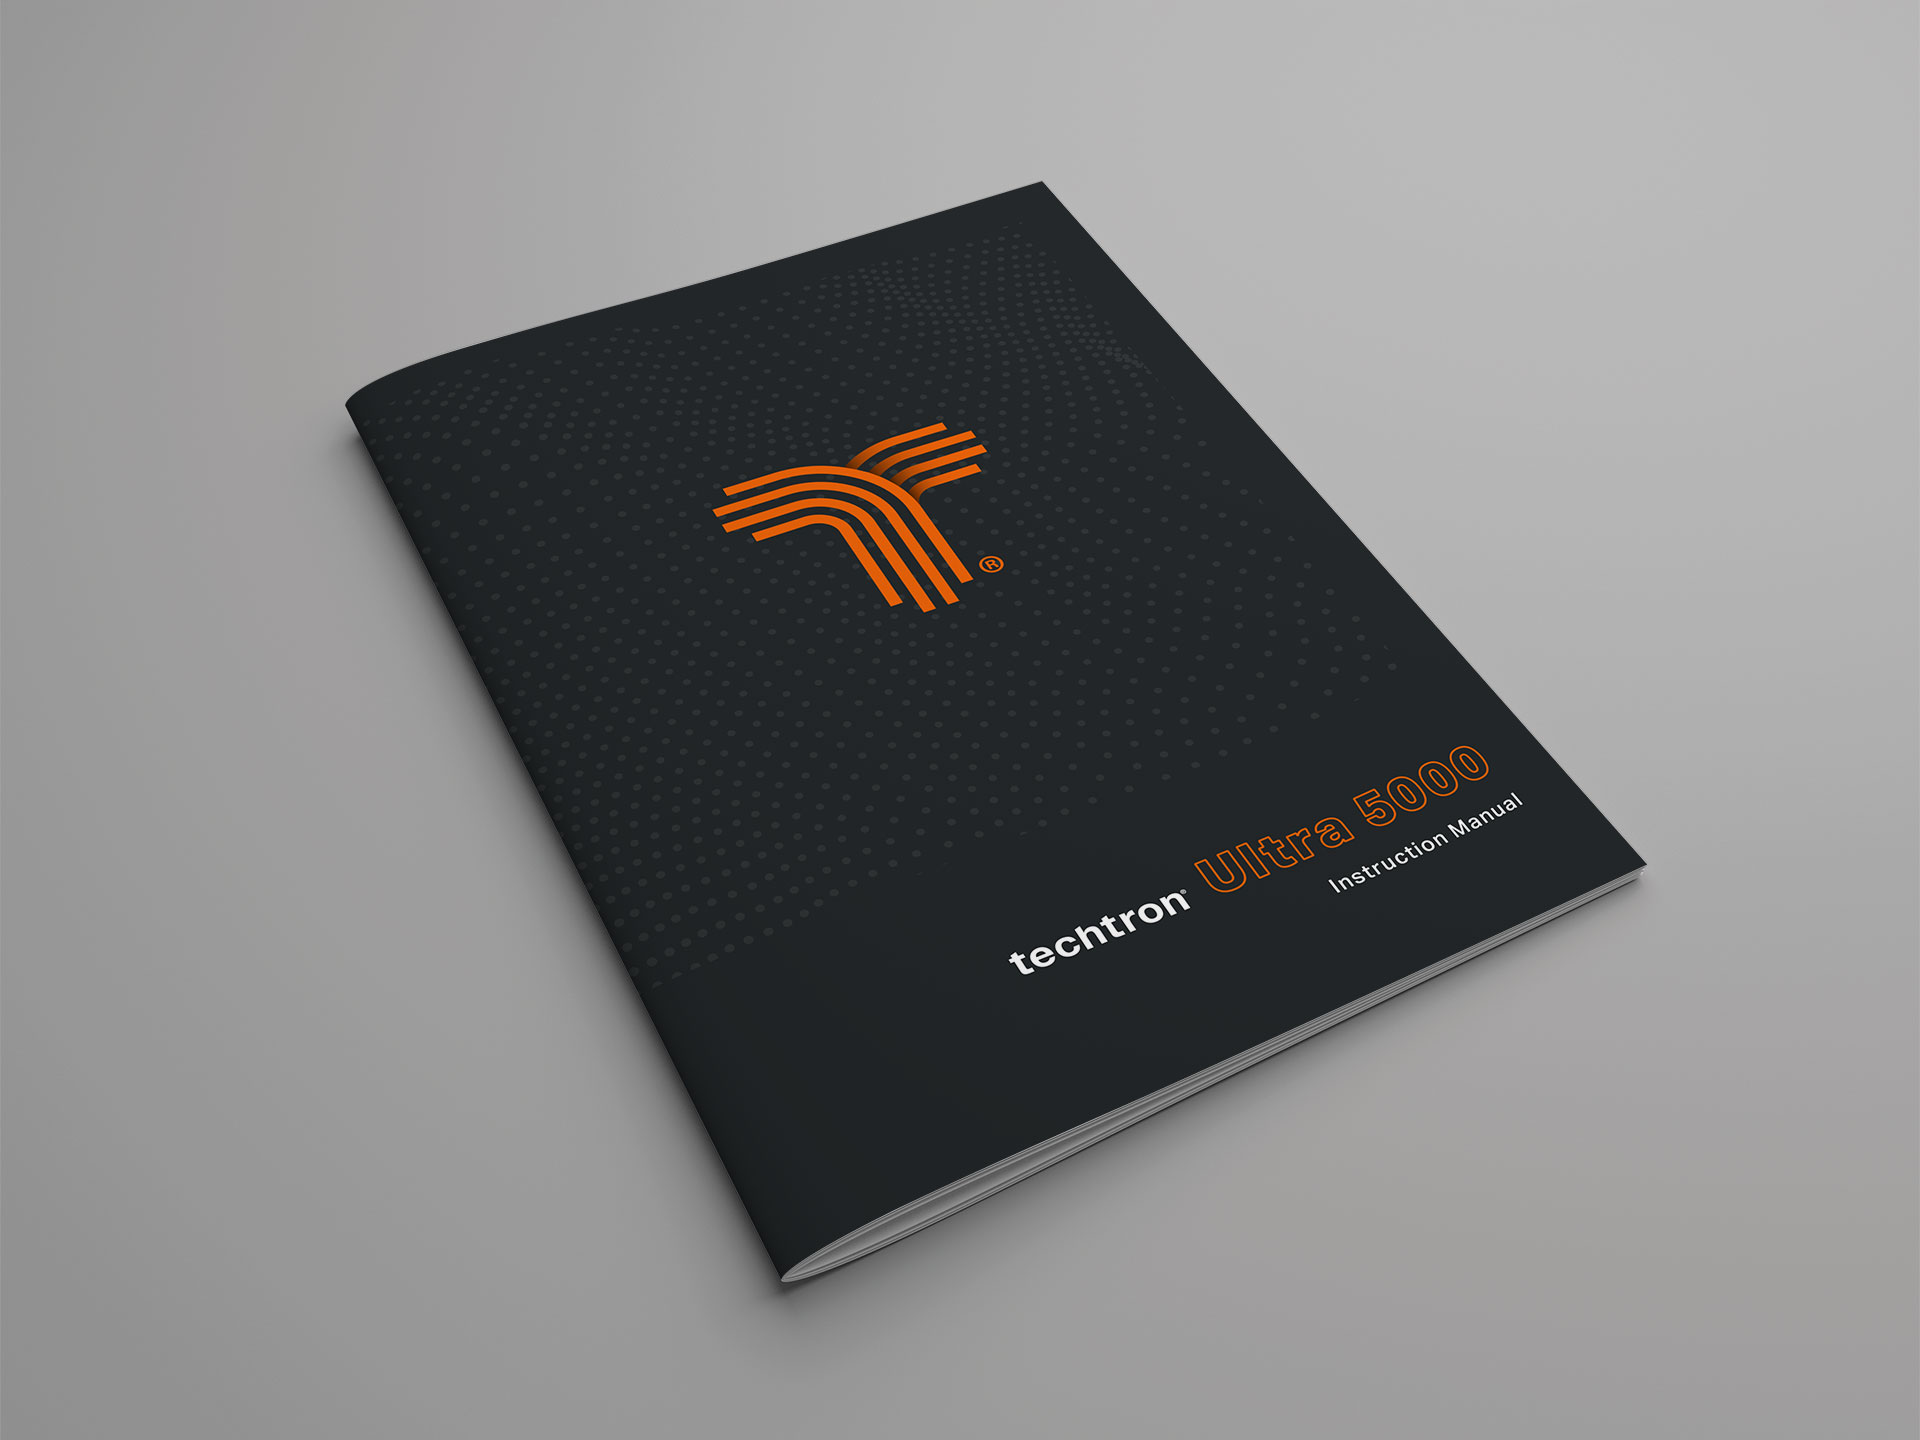 techtron instruction manual cover